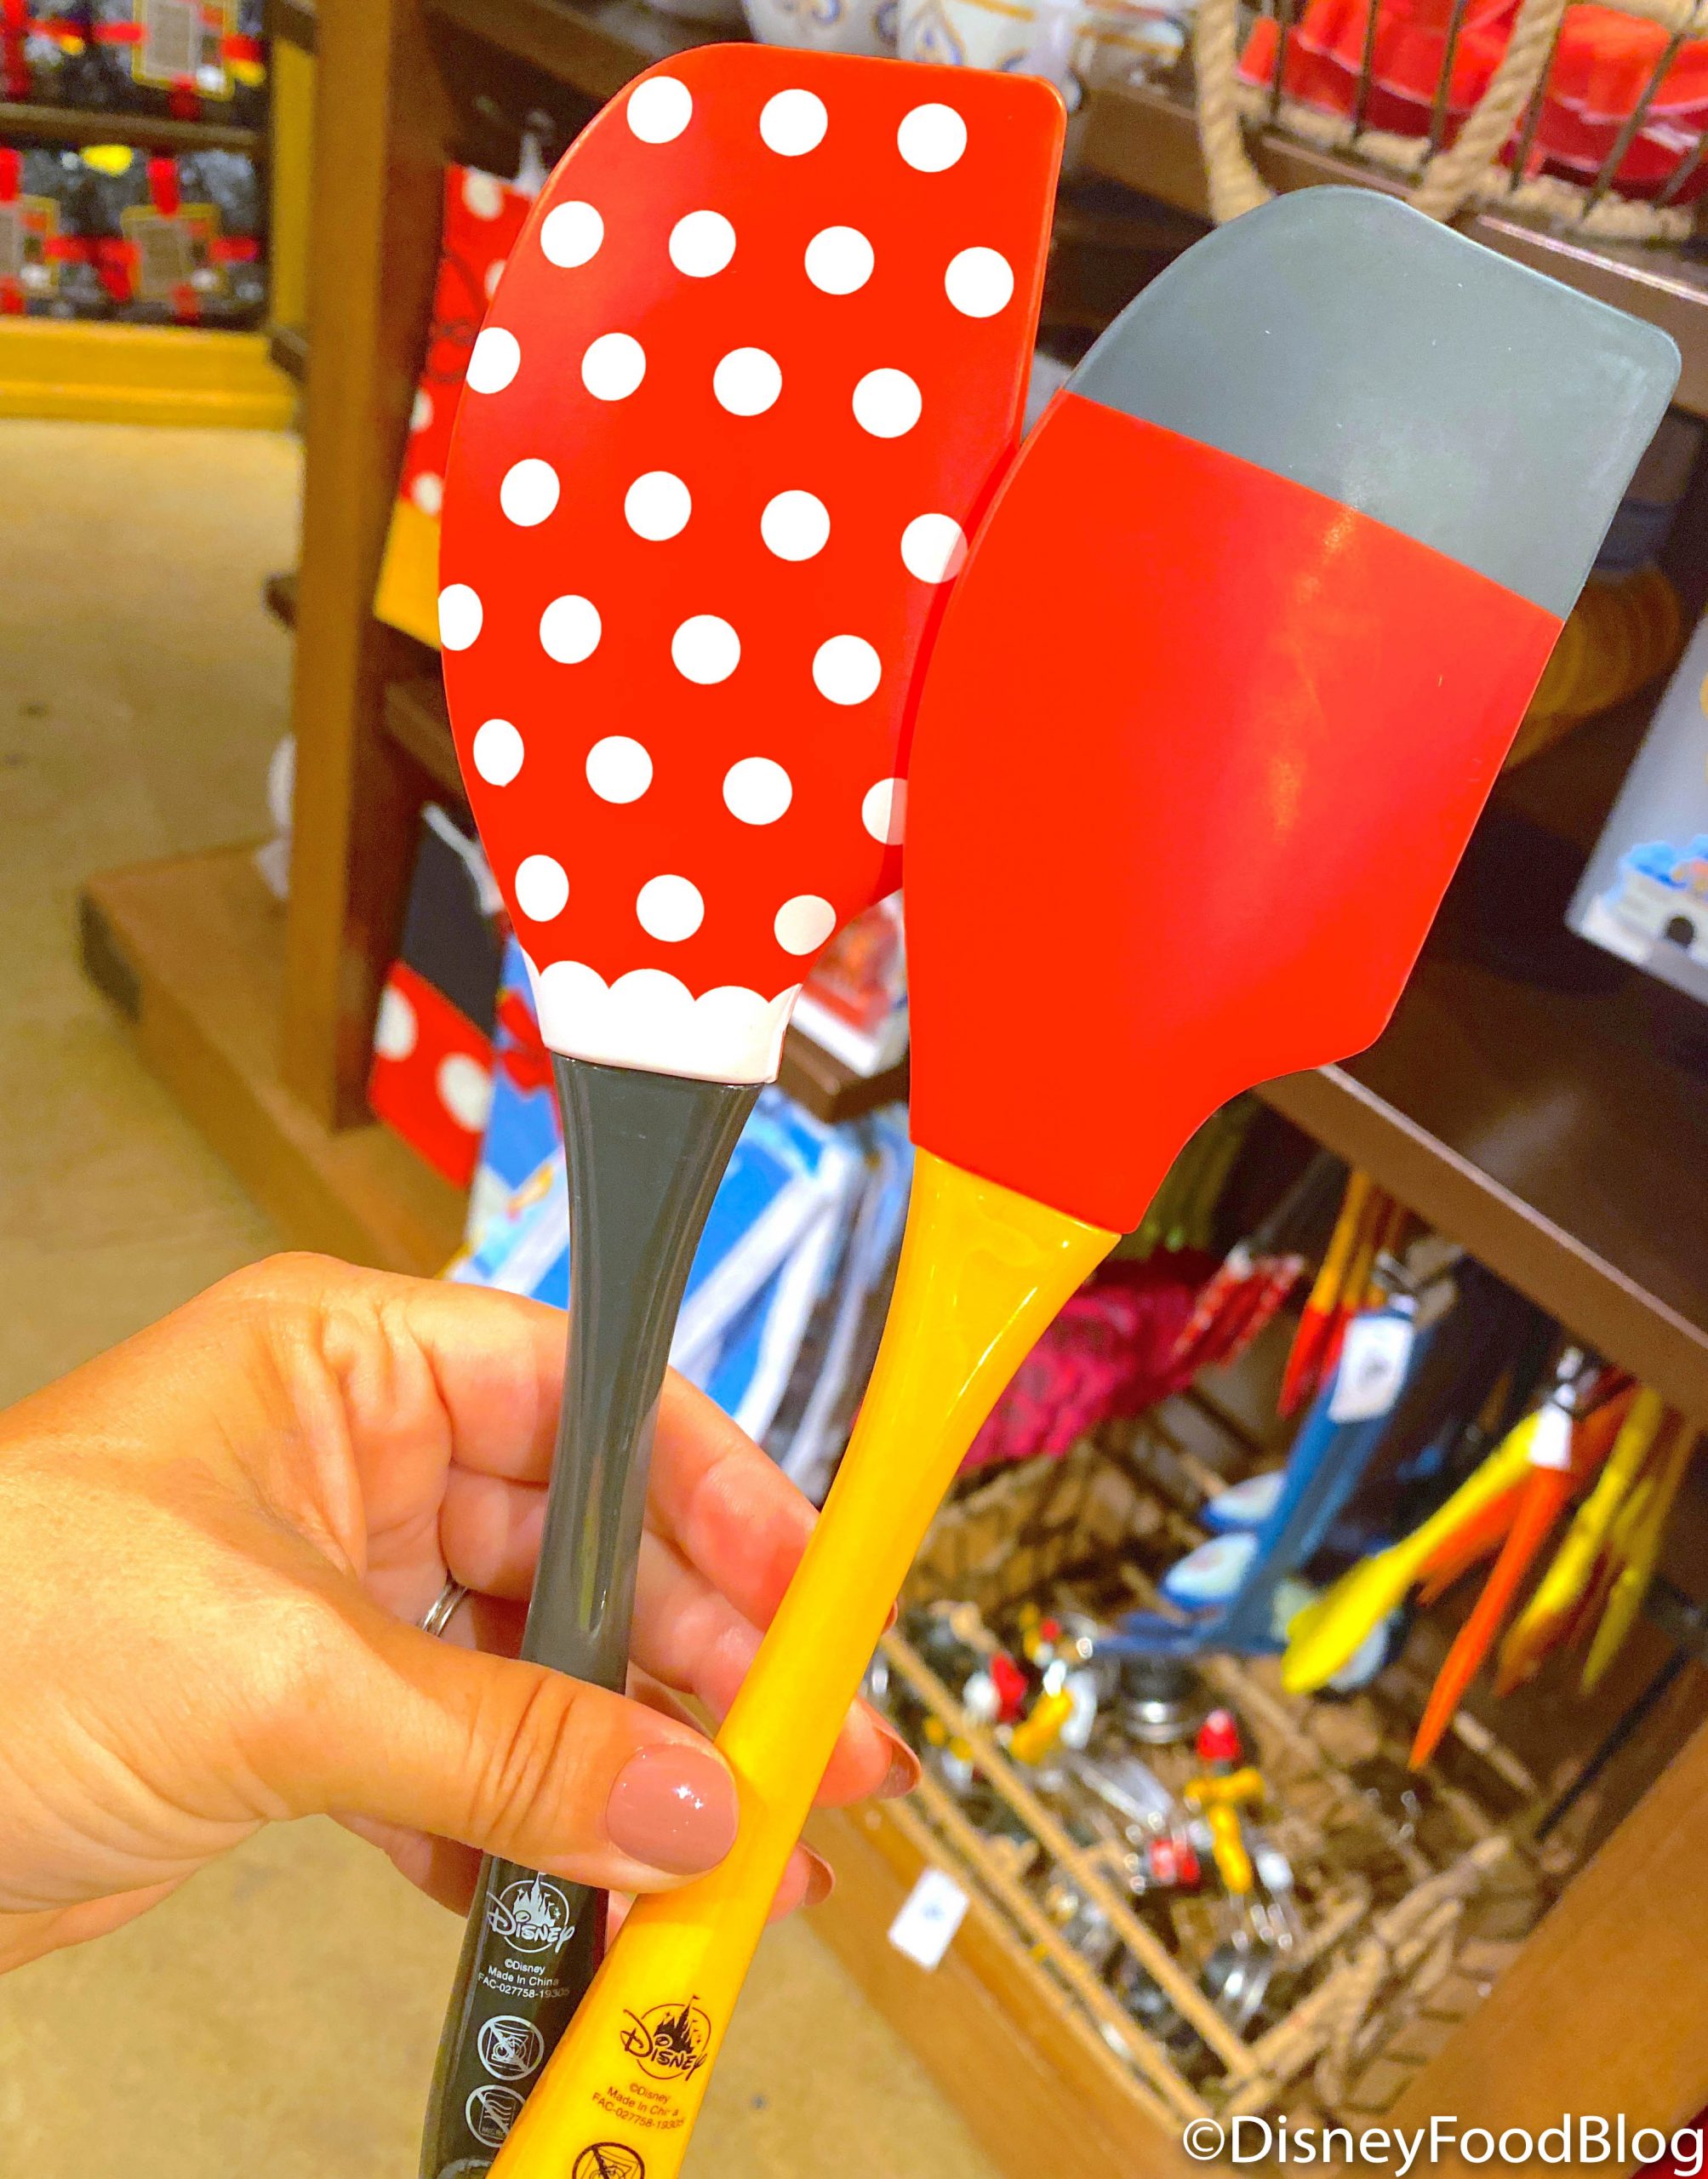 https://www.disneyfoodblog.com/wp-content/uploads/2020/09/2020-reopening-wdw-disneys-animal-kingdom-mickey-and-minnie-spatulas-2-scaled.jpg